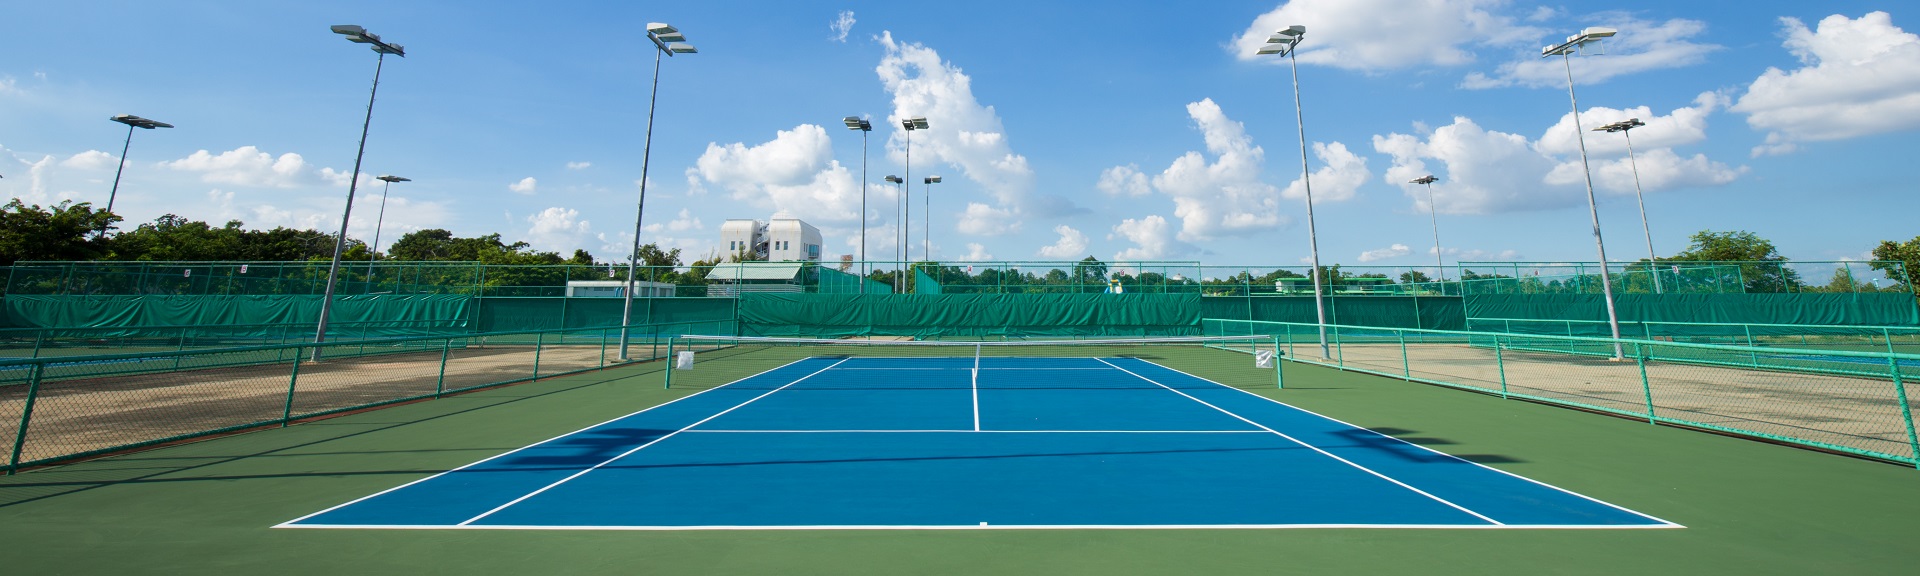 Tennis Court Resurfacing Orlando